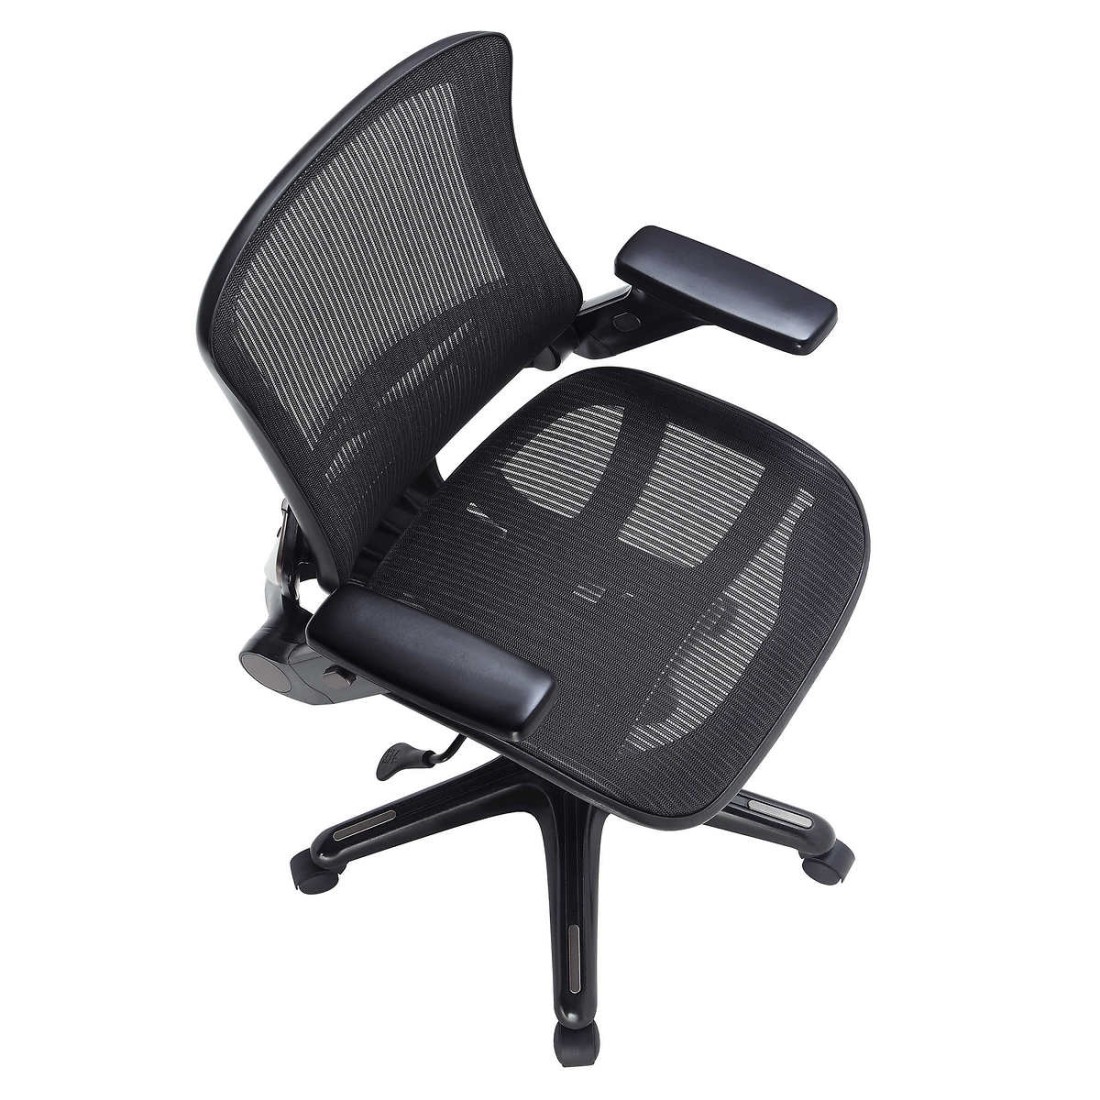 Bayside Furnishings Metrex Iv Mesh Office Chair Fully Adjustable Armrests Black 142531047 1100x1100 